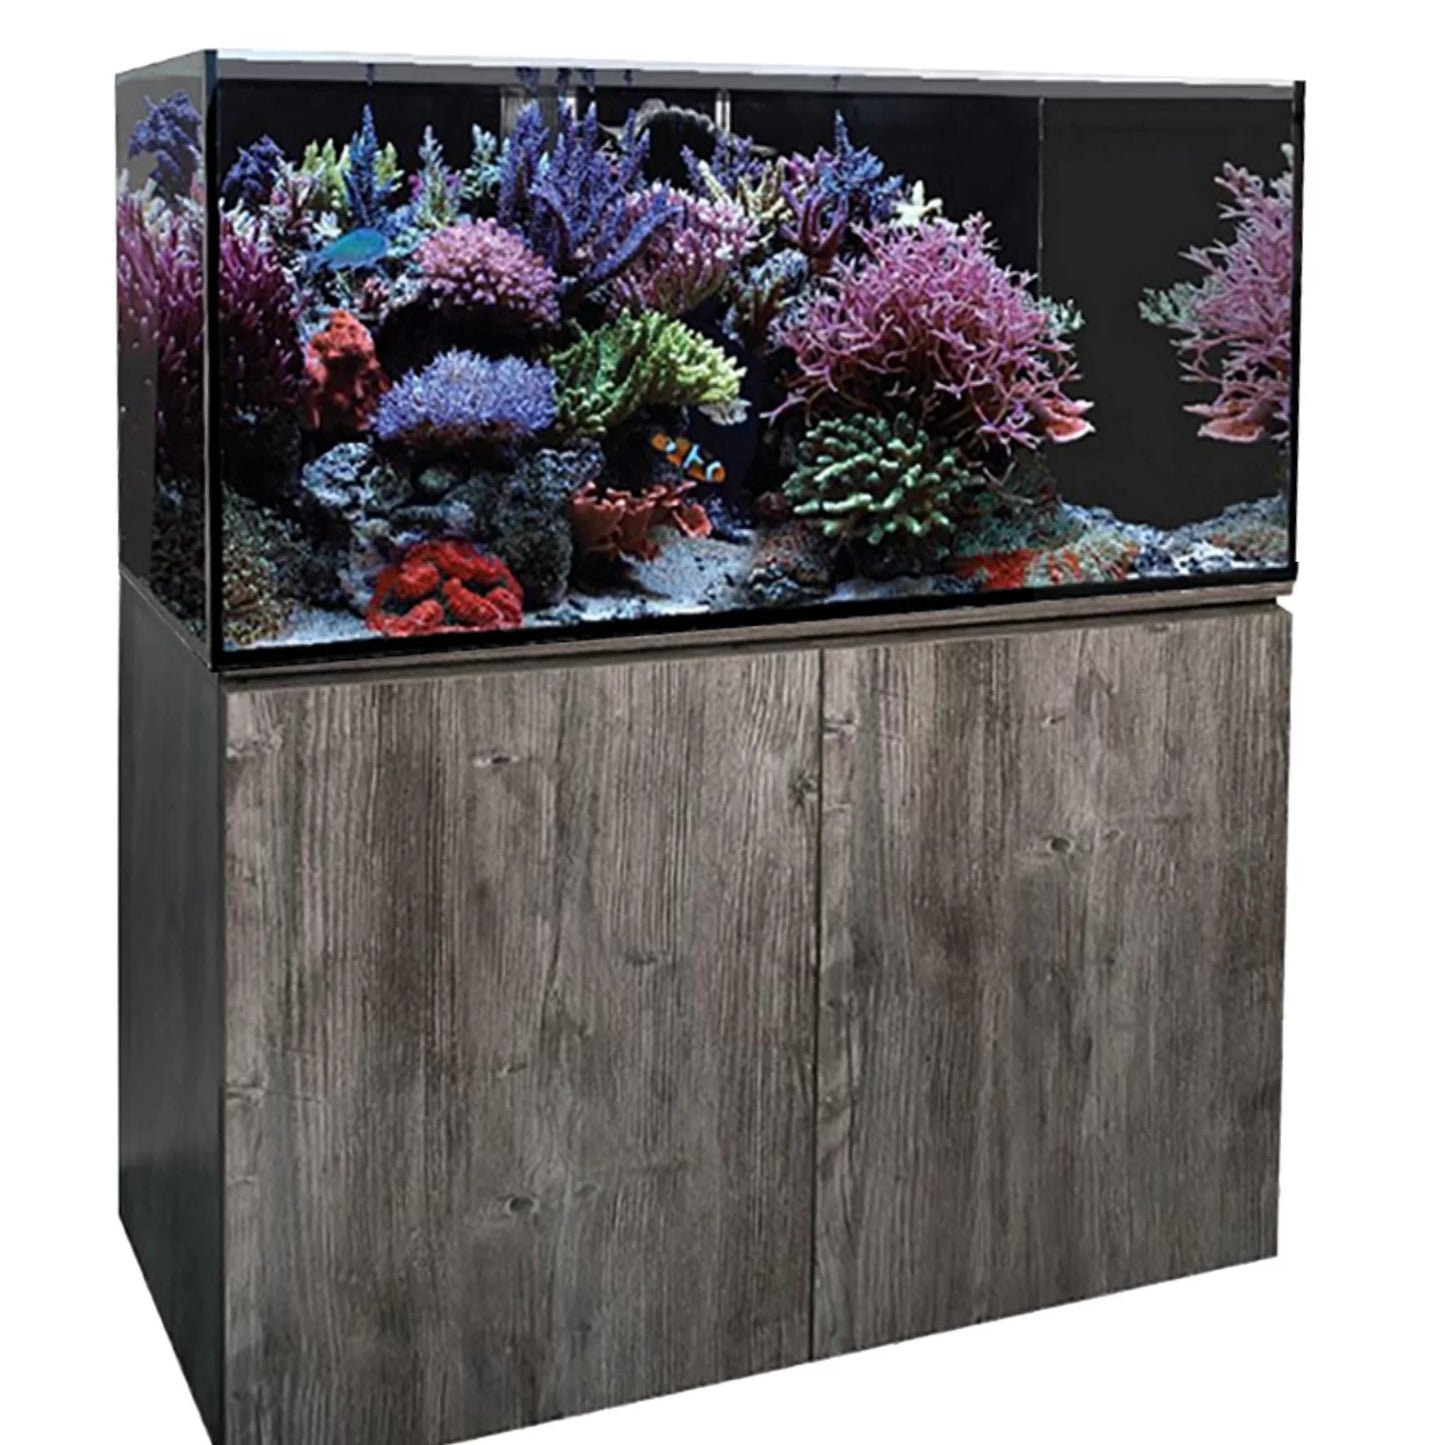 Aqua One ReefSys 326 Marine/Freshwater Sump Aquarium